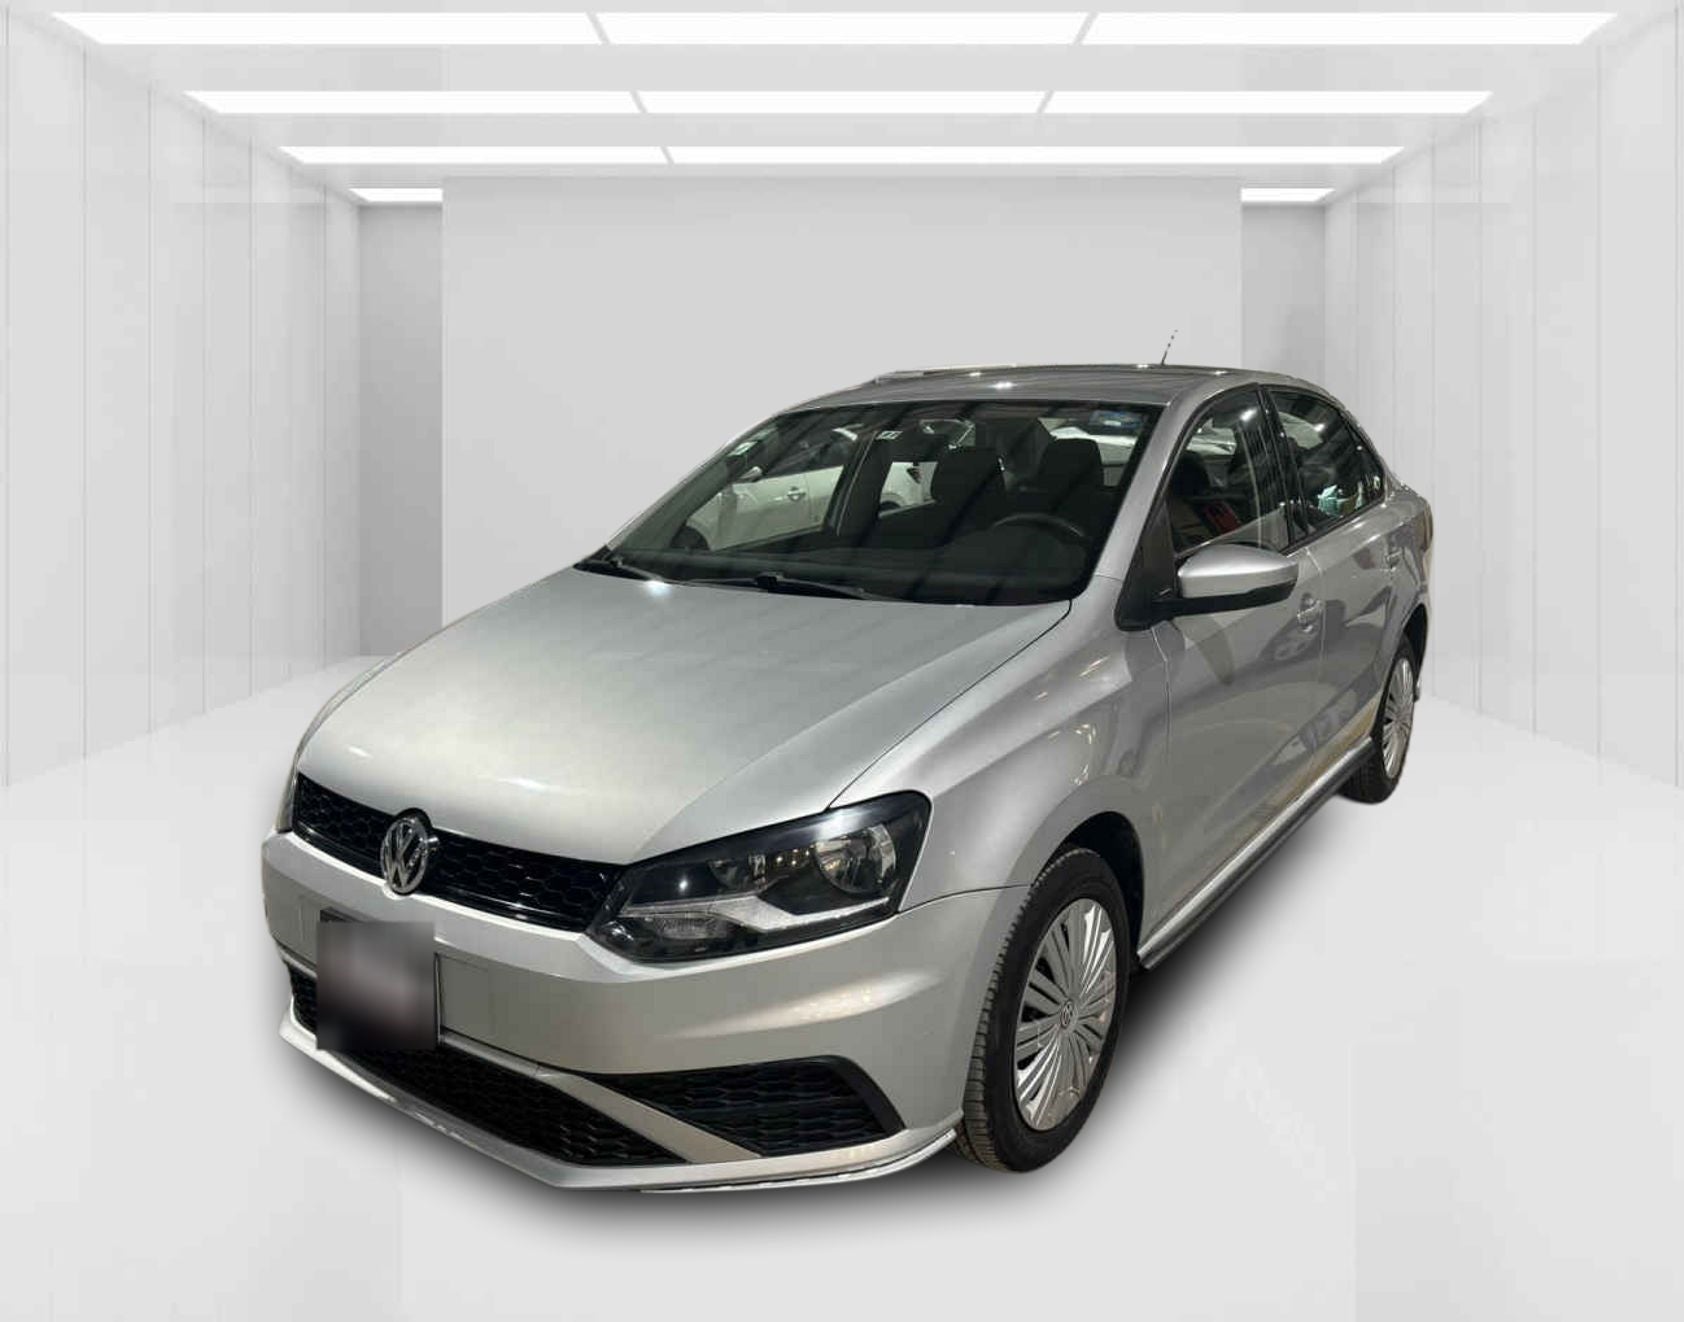 2021 Volkswagen Vento 4p Starline L4/1.6 Aut